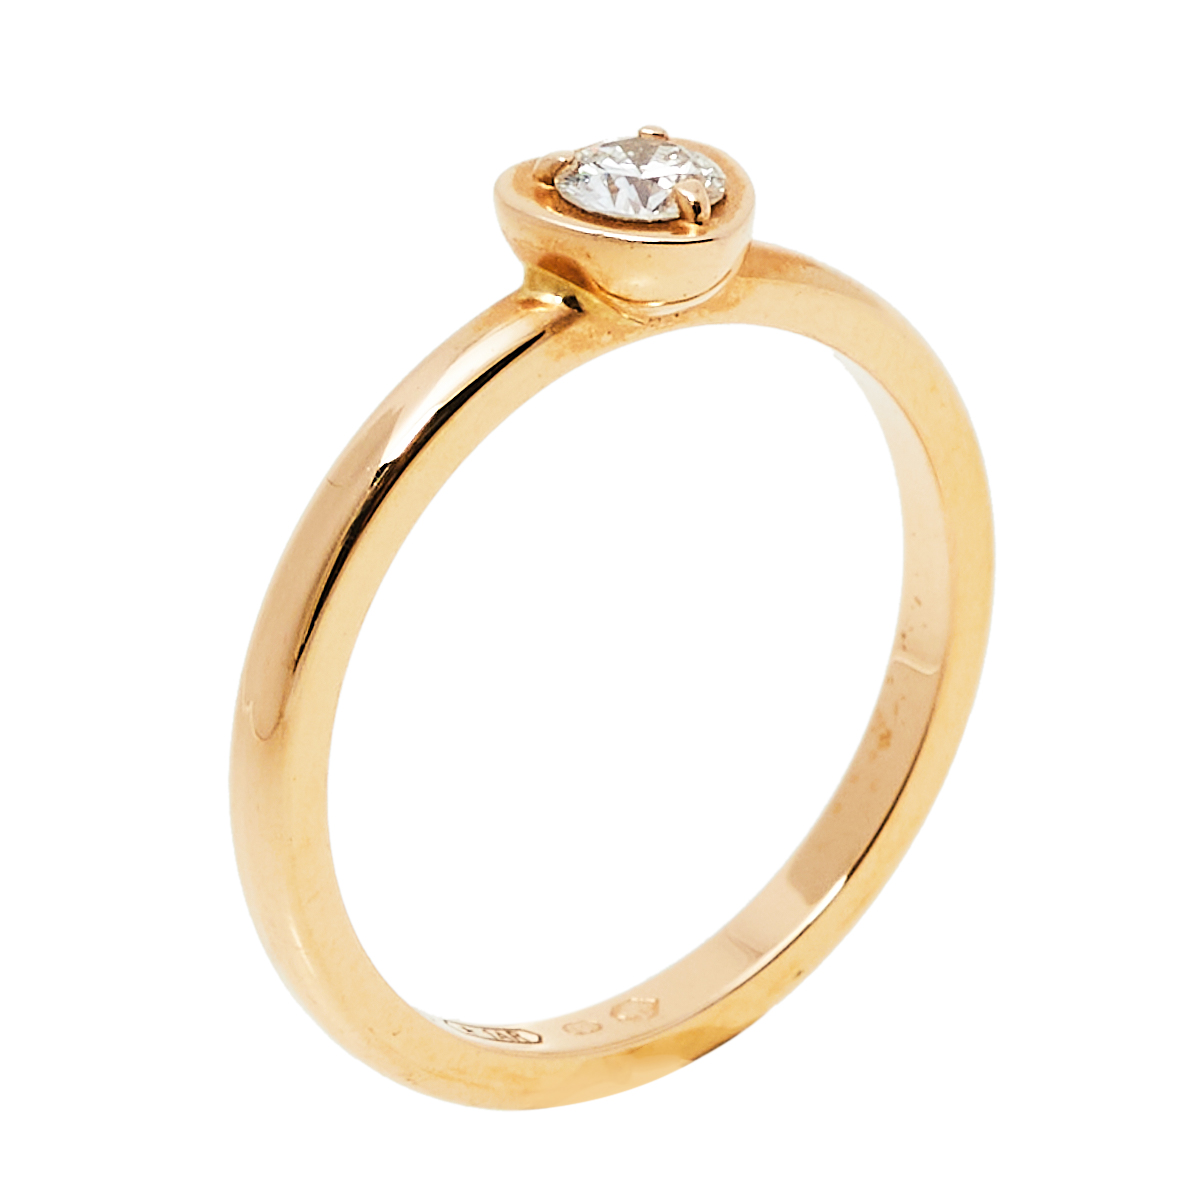 Cartier Diamants Légers Heart Motif Diamond 18K Rose Gold Ring Size 50